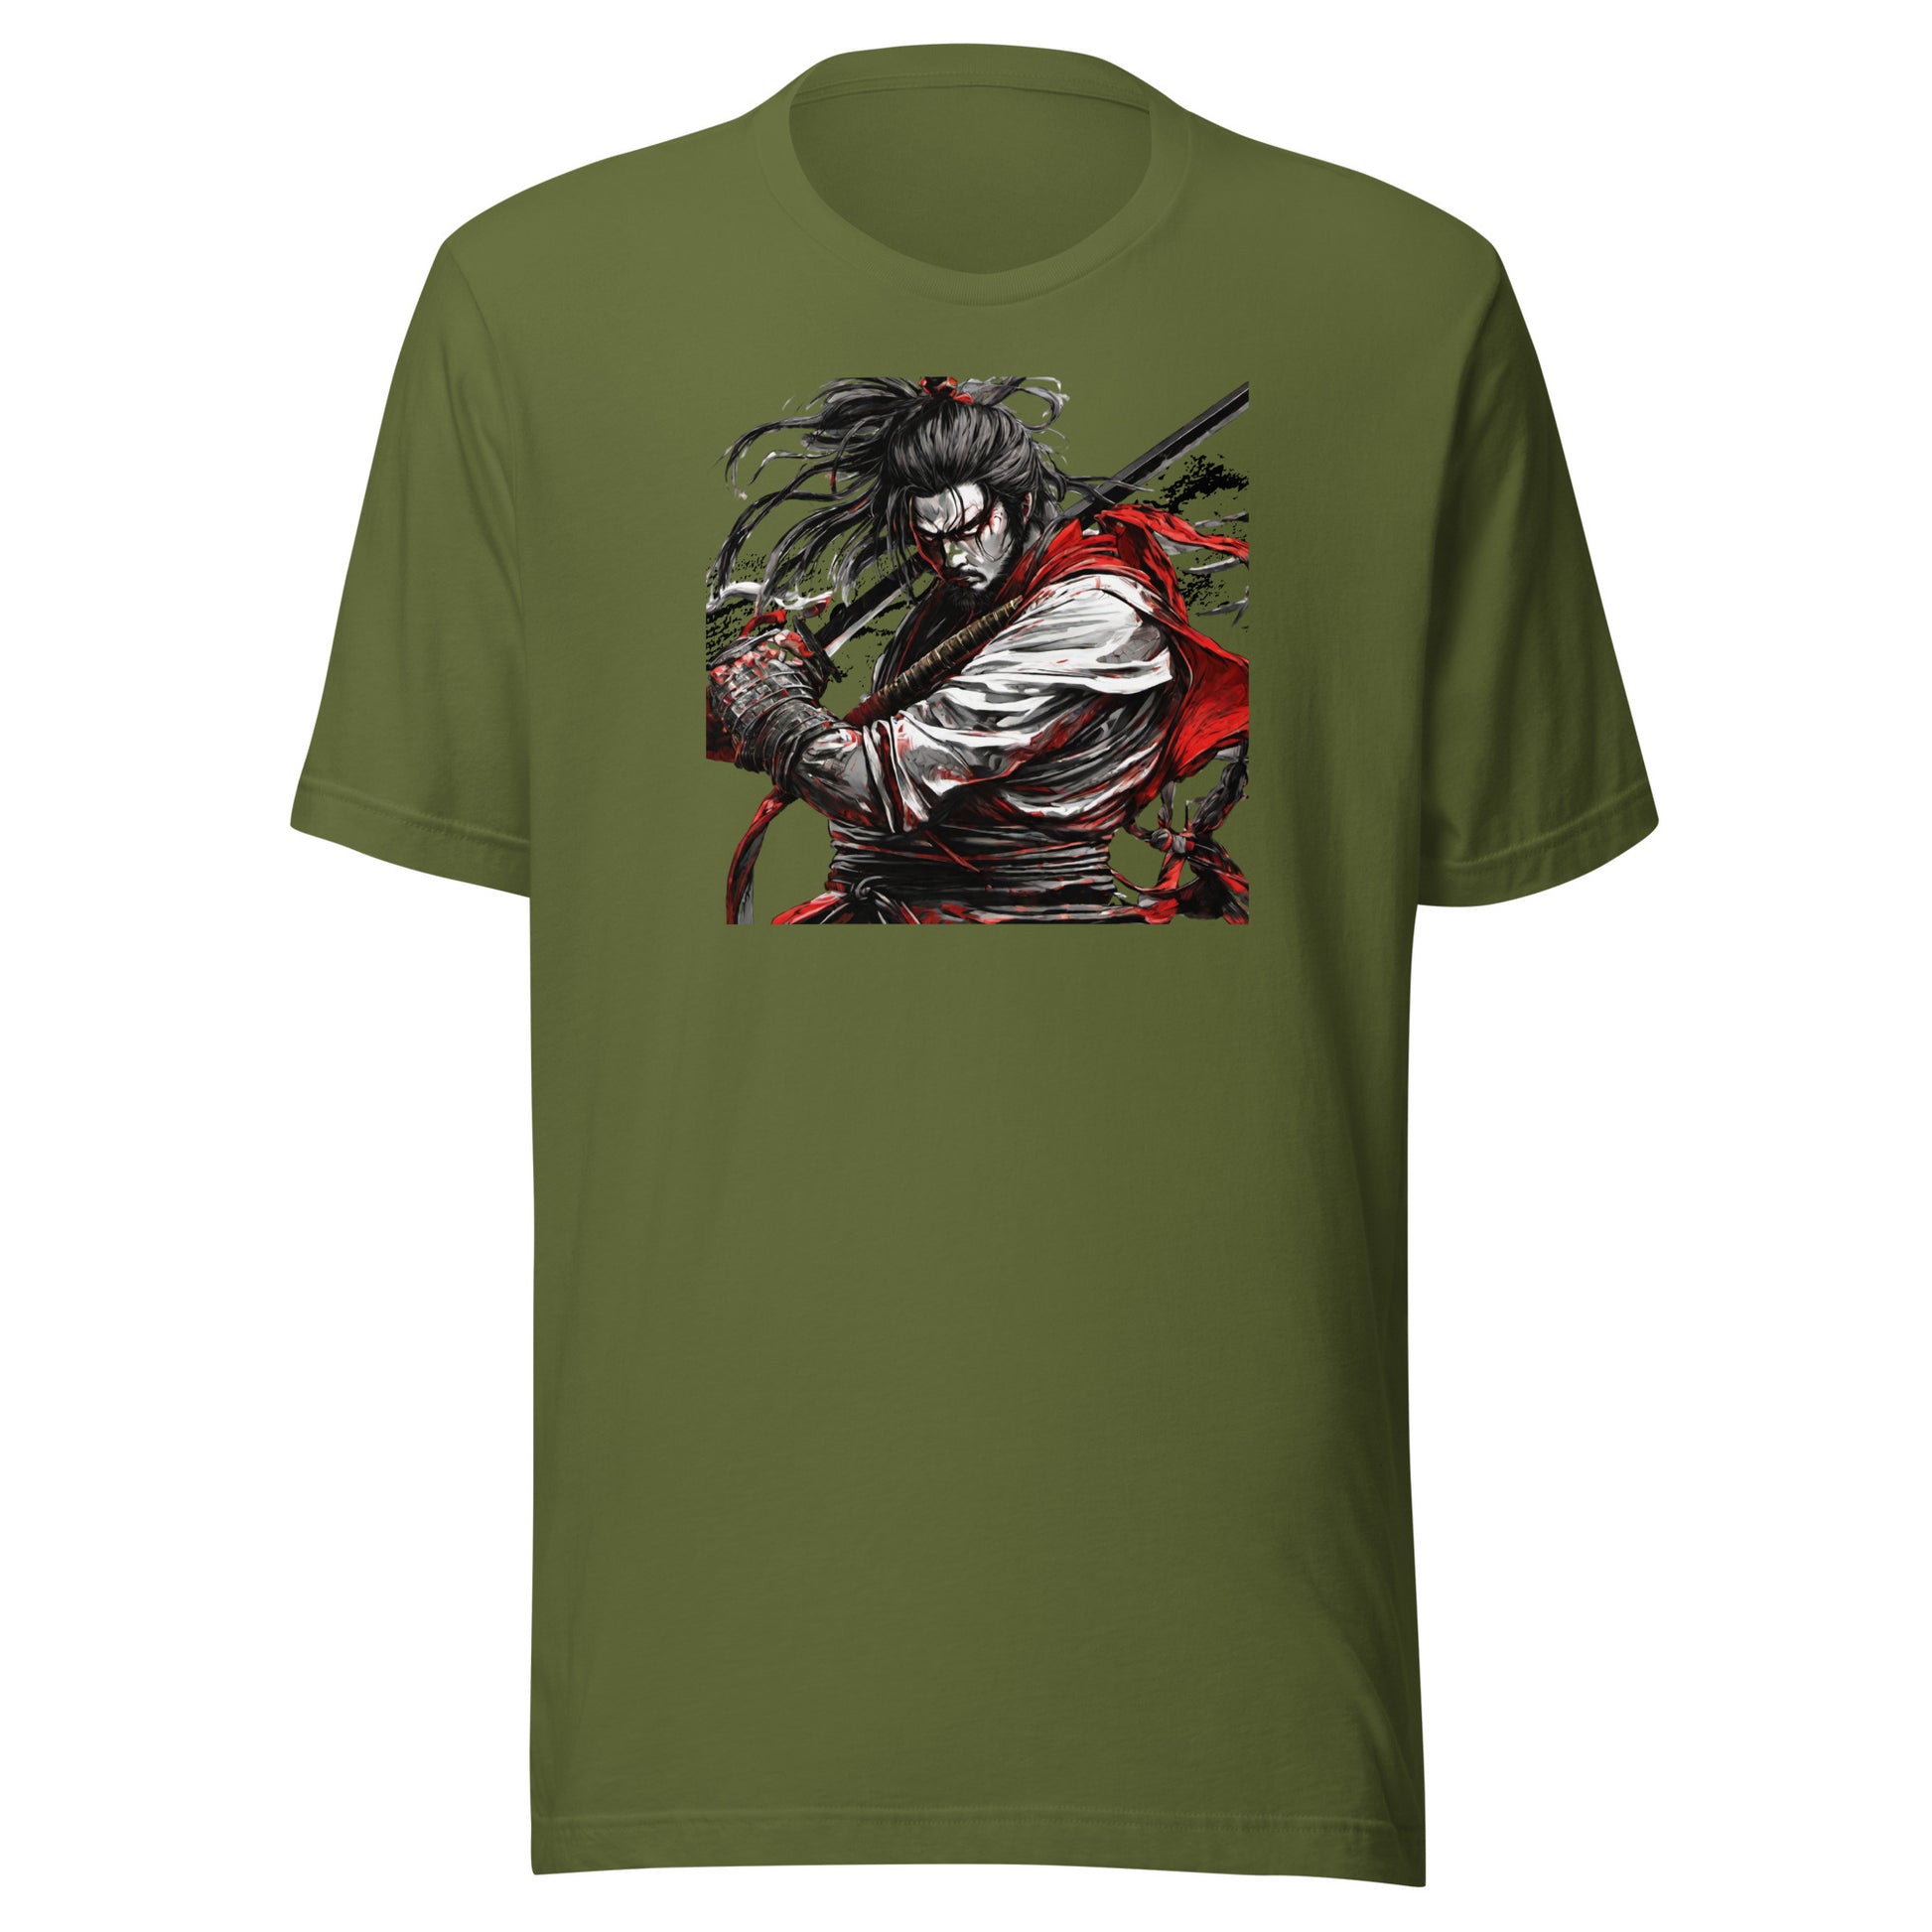 Graceful Warrior Men's Graphic T-Shirt Olive